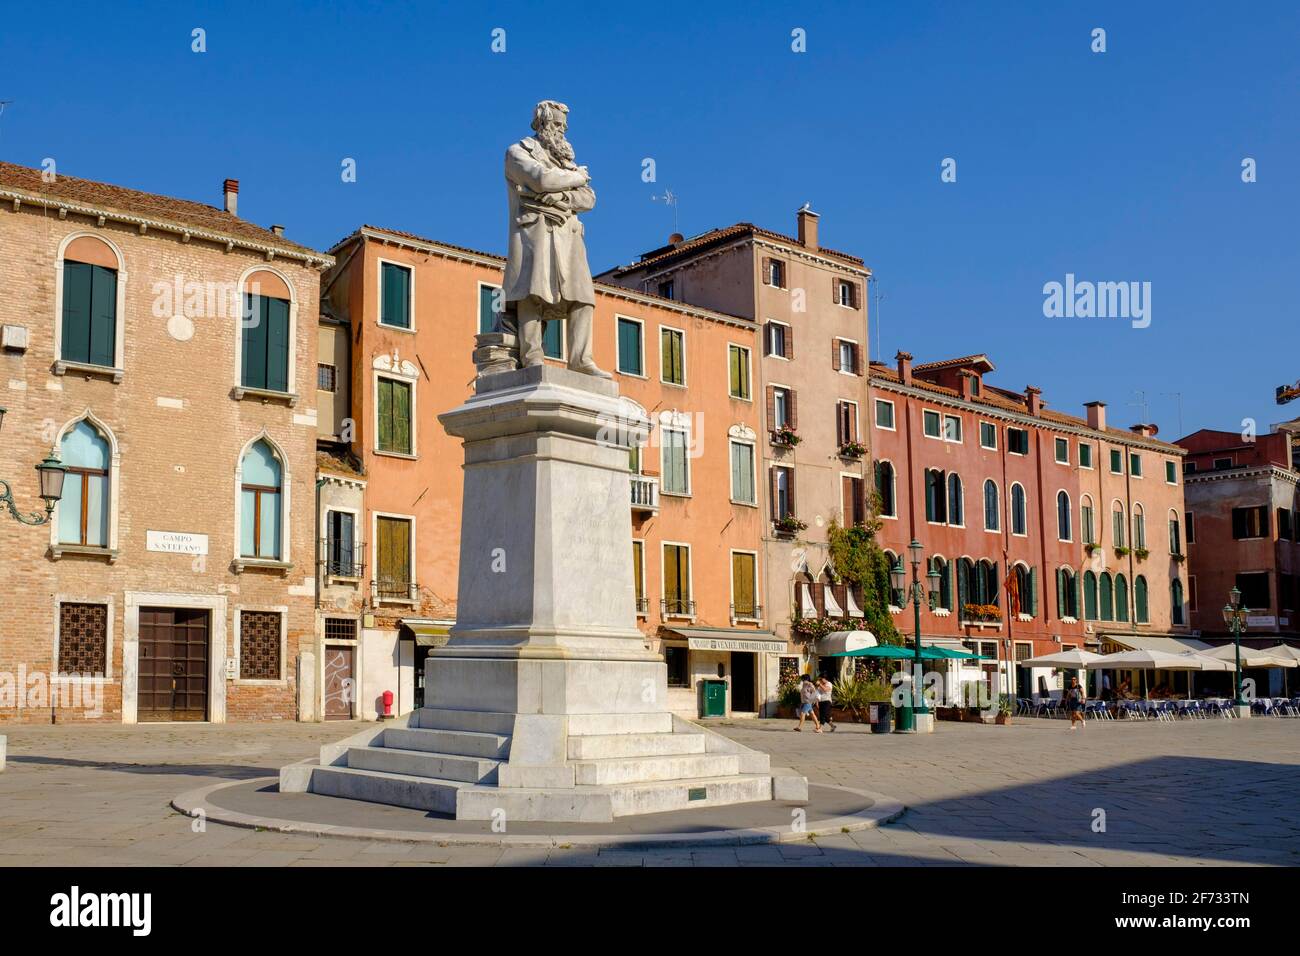 Monument to Niccolo Tommaseo, 1802-1884, Italian writer and lexigrapher, statue by Francesco Barzaghi, Campo Santo Stefano, Venice, Veneto, Italy Stock Photo